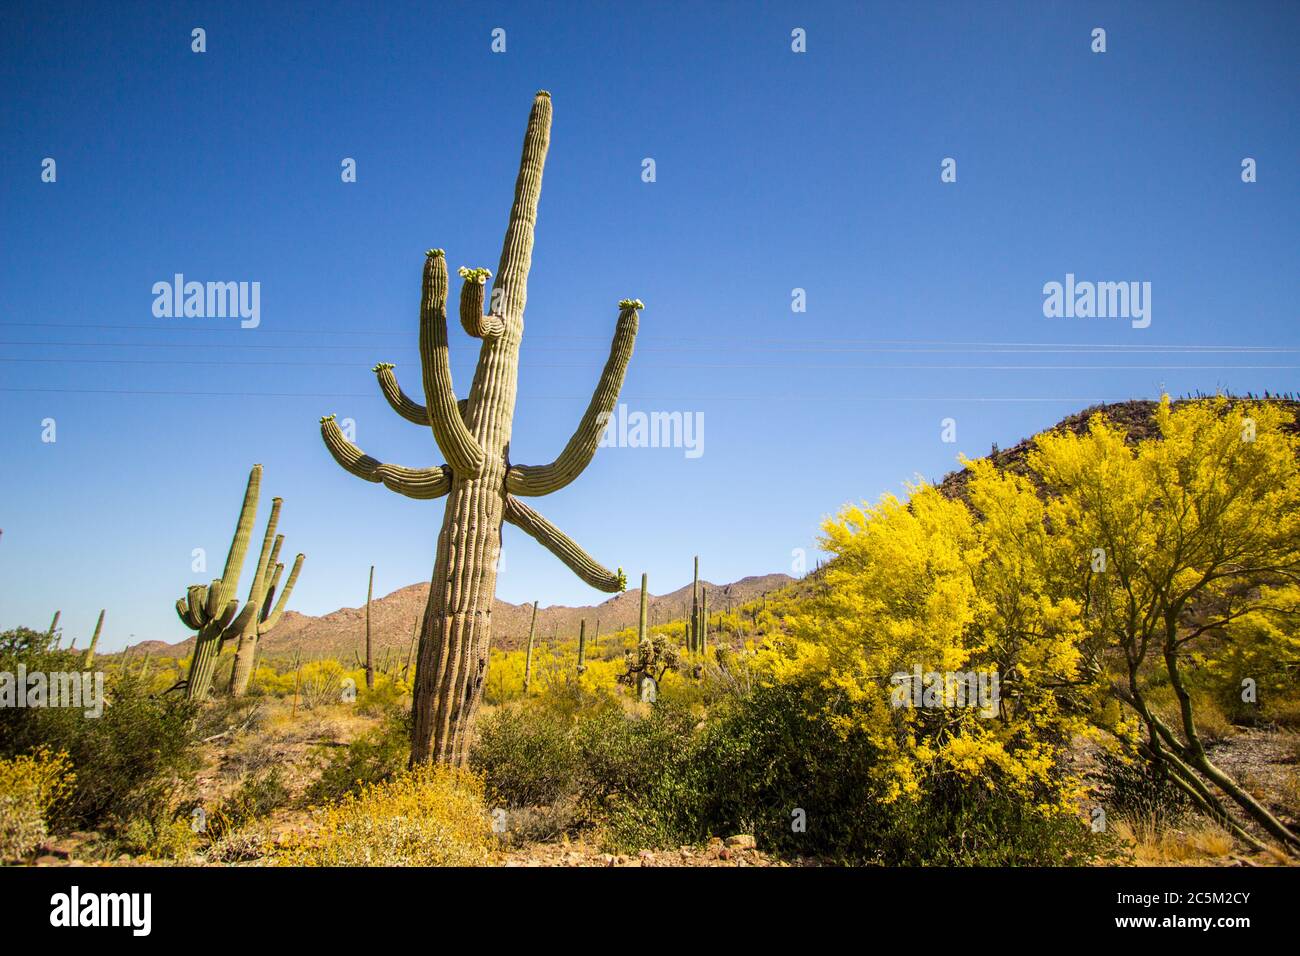 Saguaro Cactus in fiore. Grande cactus Saguaro con fiori selvatici al Parco Nazionale Saguaro in Tucson Arizona. Foto Stock